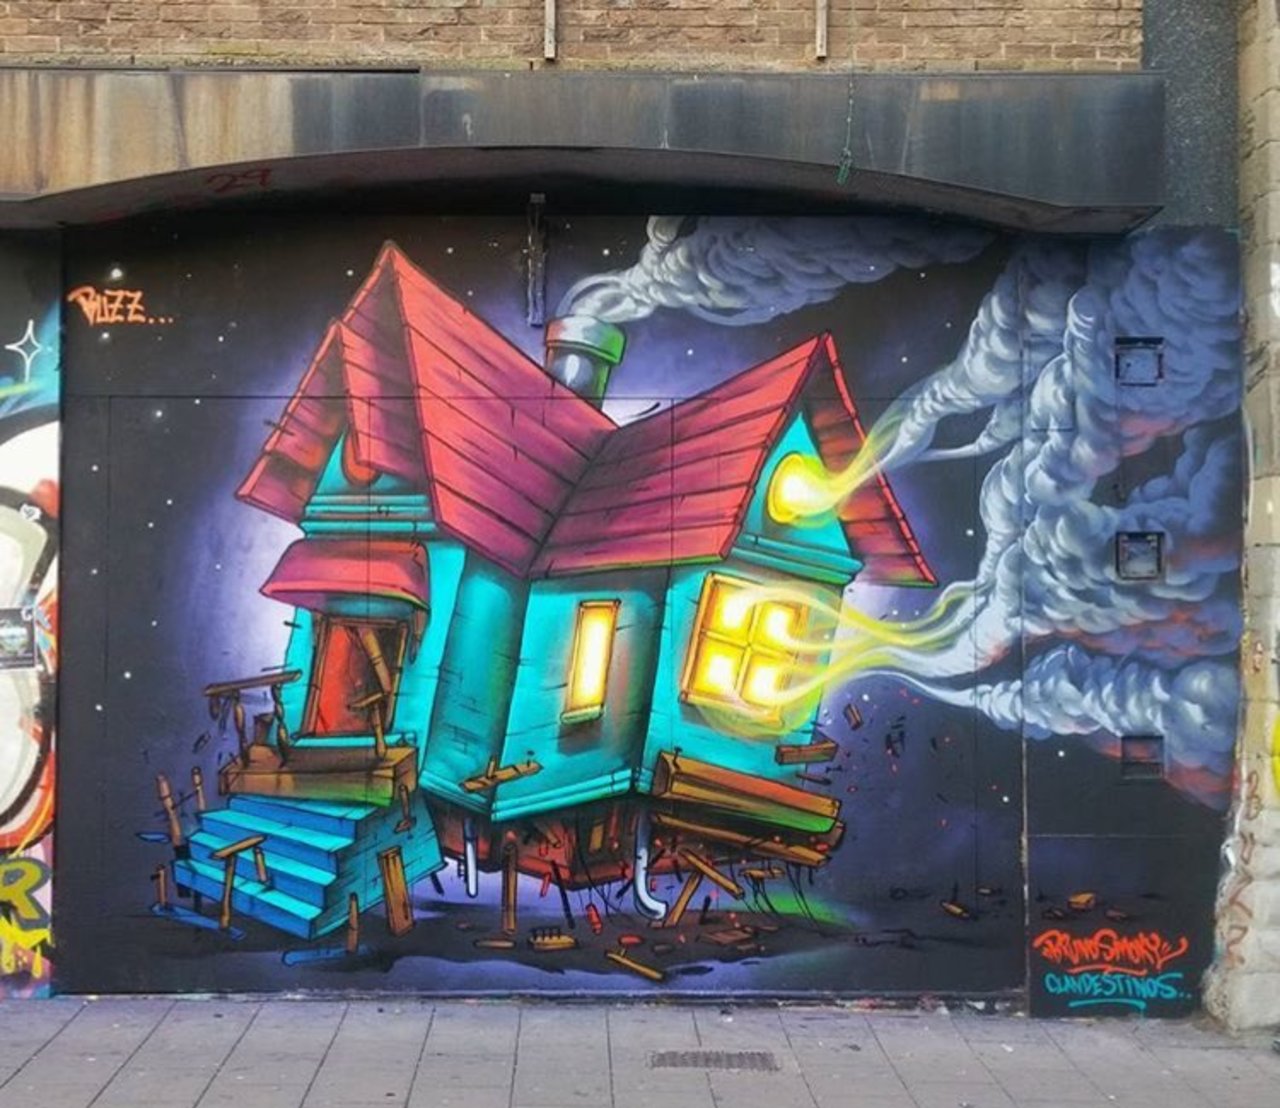 Street Art in Bristol 🇬🇧 by Brunosmoky #art #mural #graffiti #streetart https://t.co/qFGXY57uce